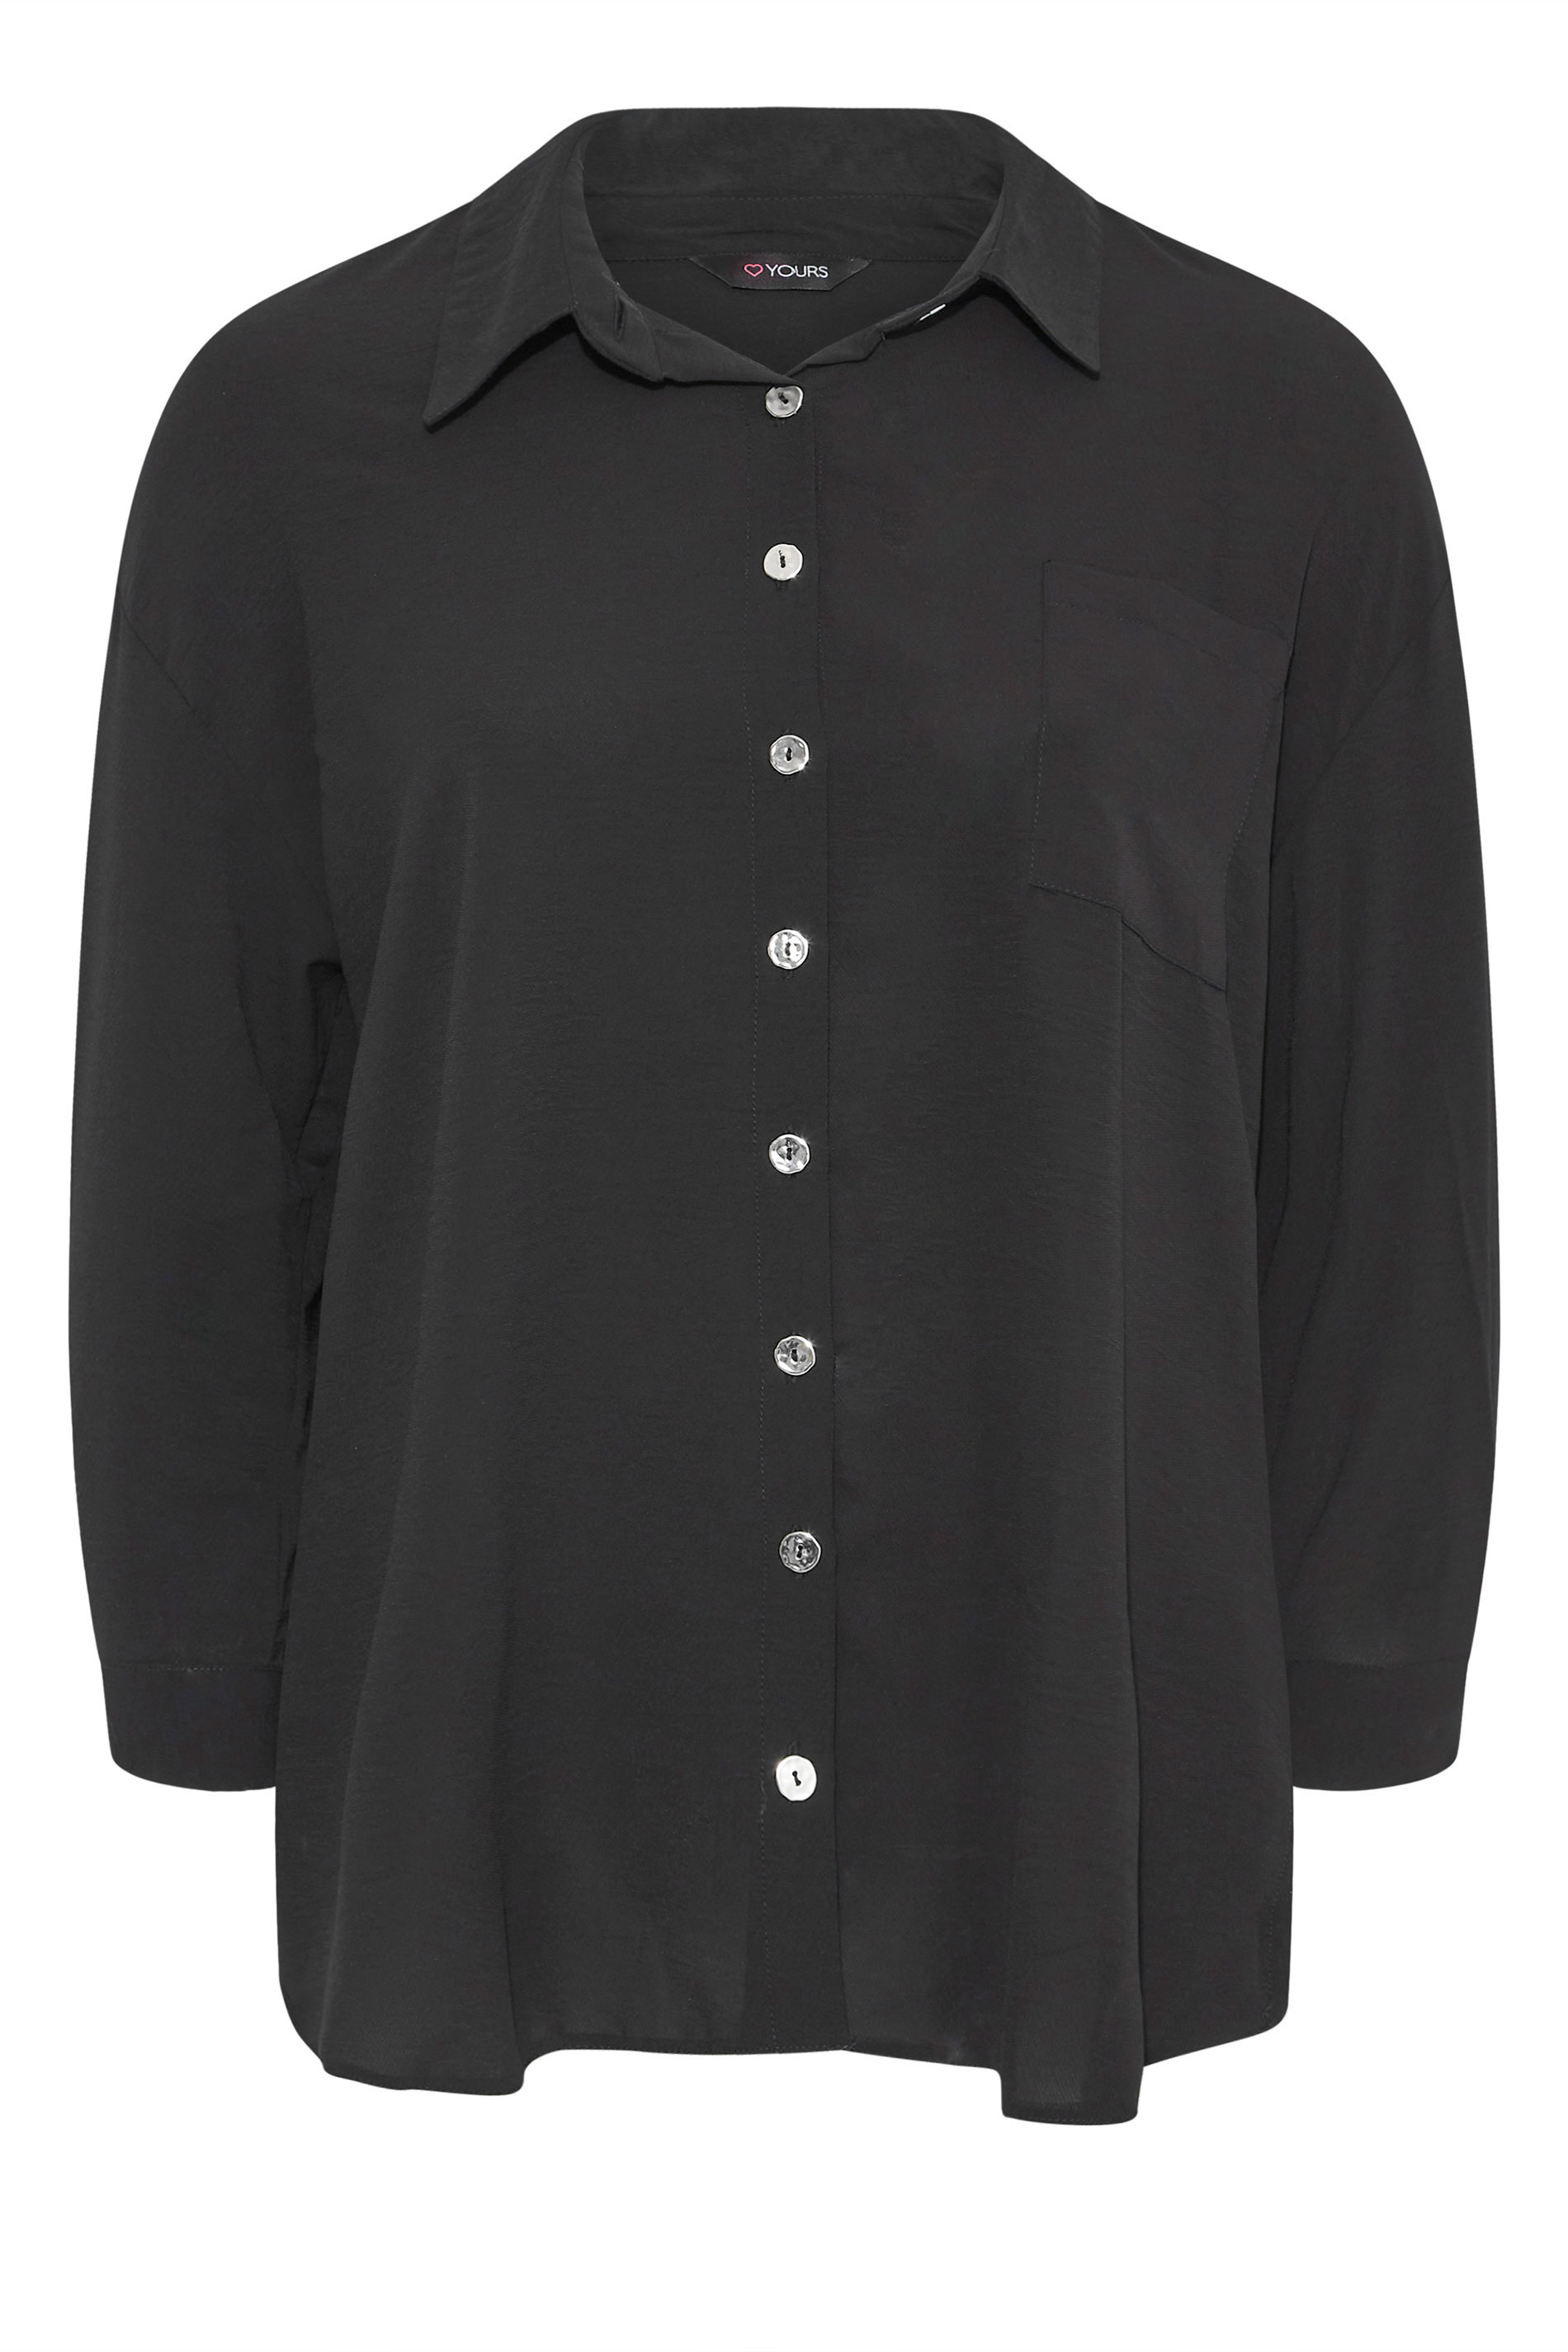 Plus Size Curve Black Button Through Shirt | Yours Clothing